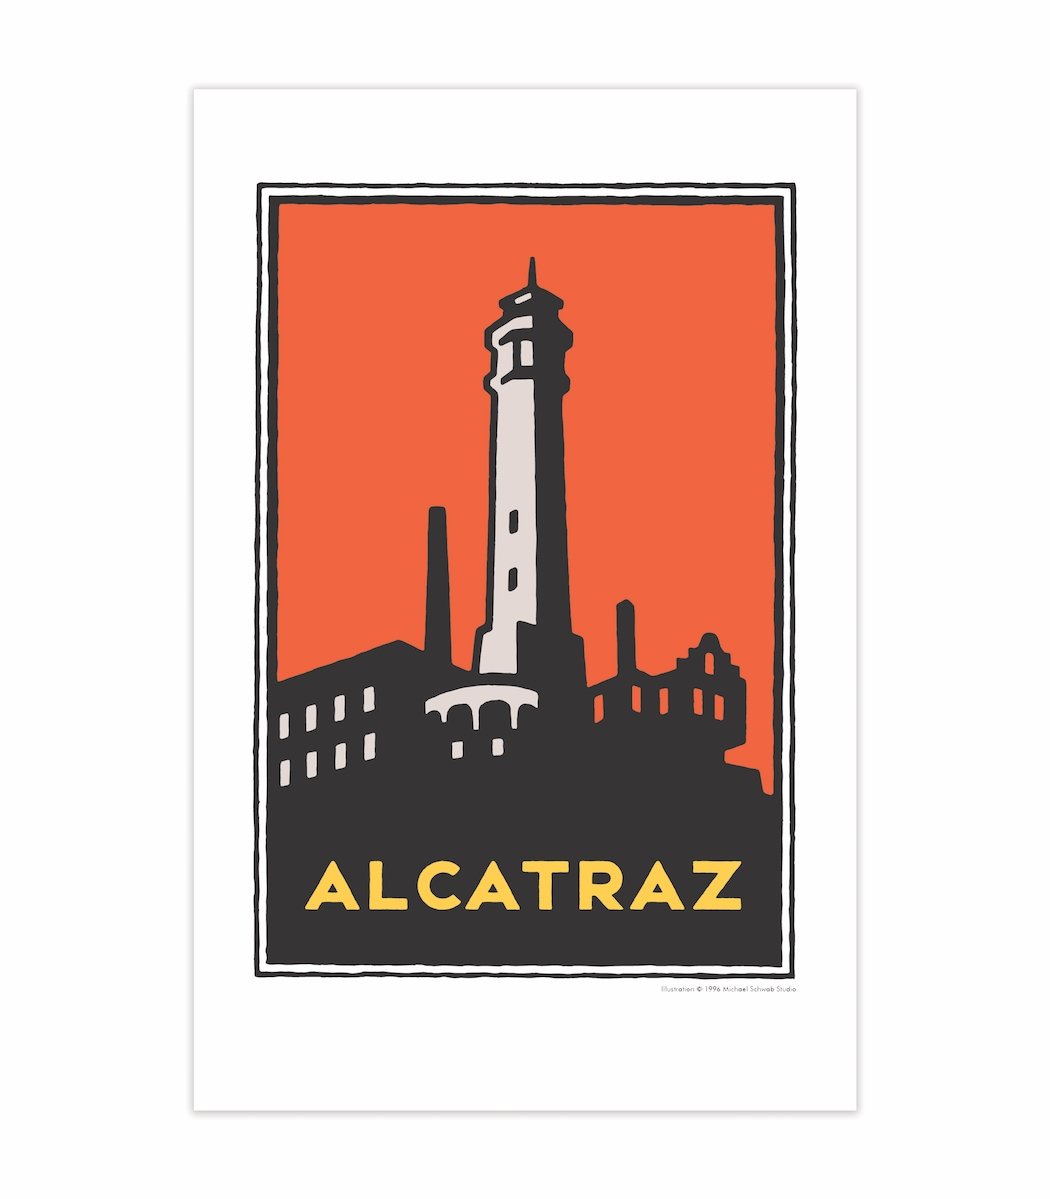 11 x 17 inch Alcatraz Island print, art by Michael Schwab.